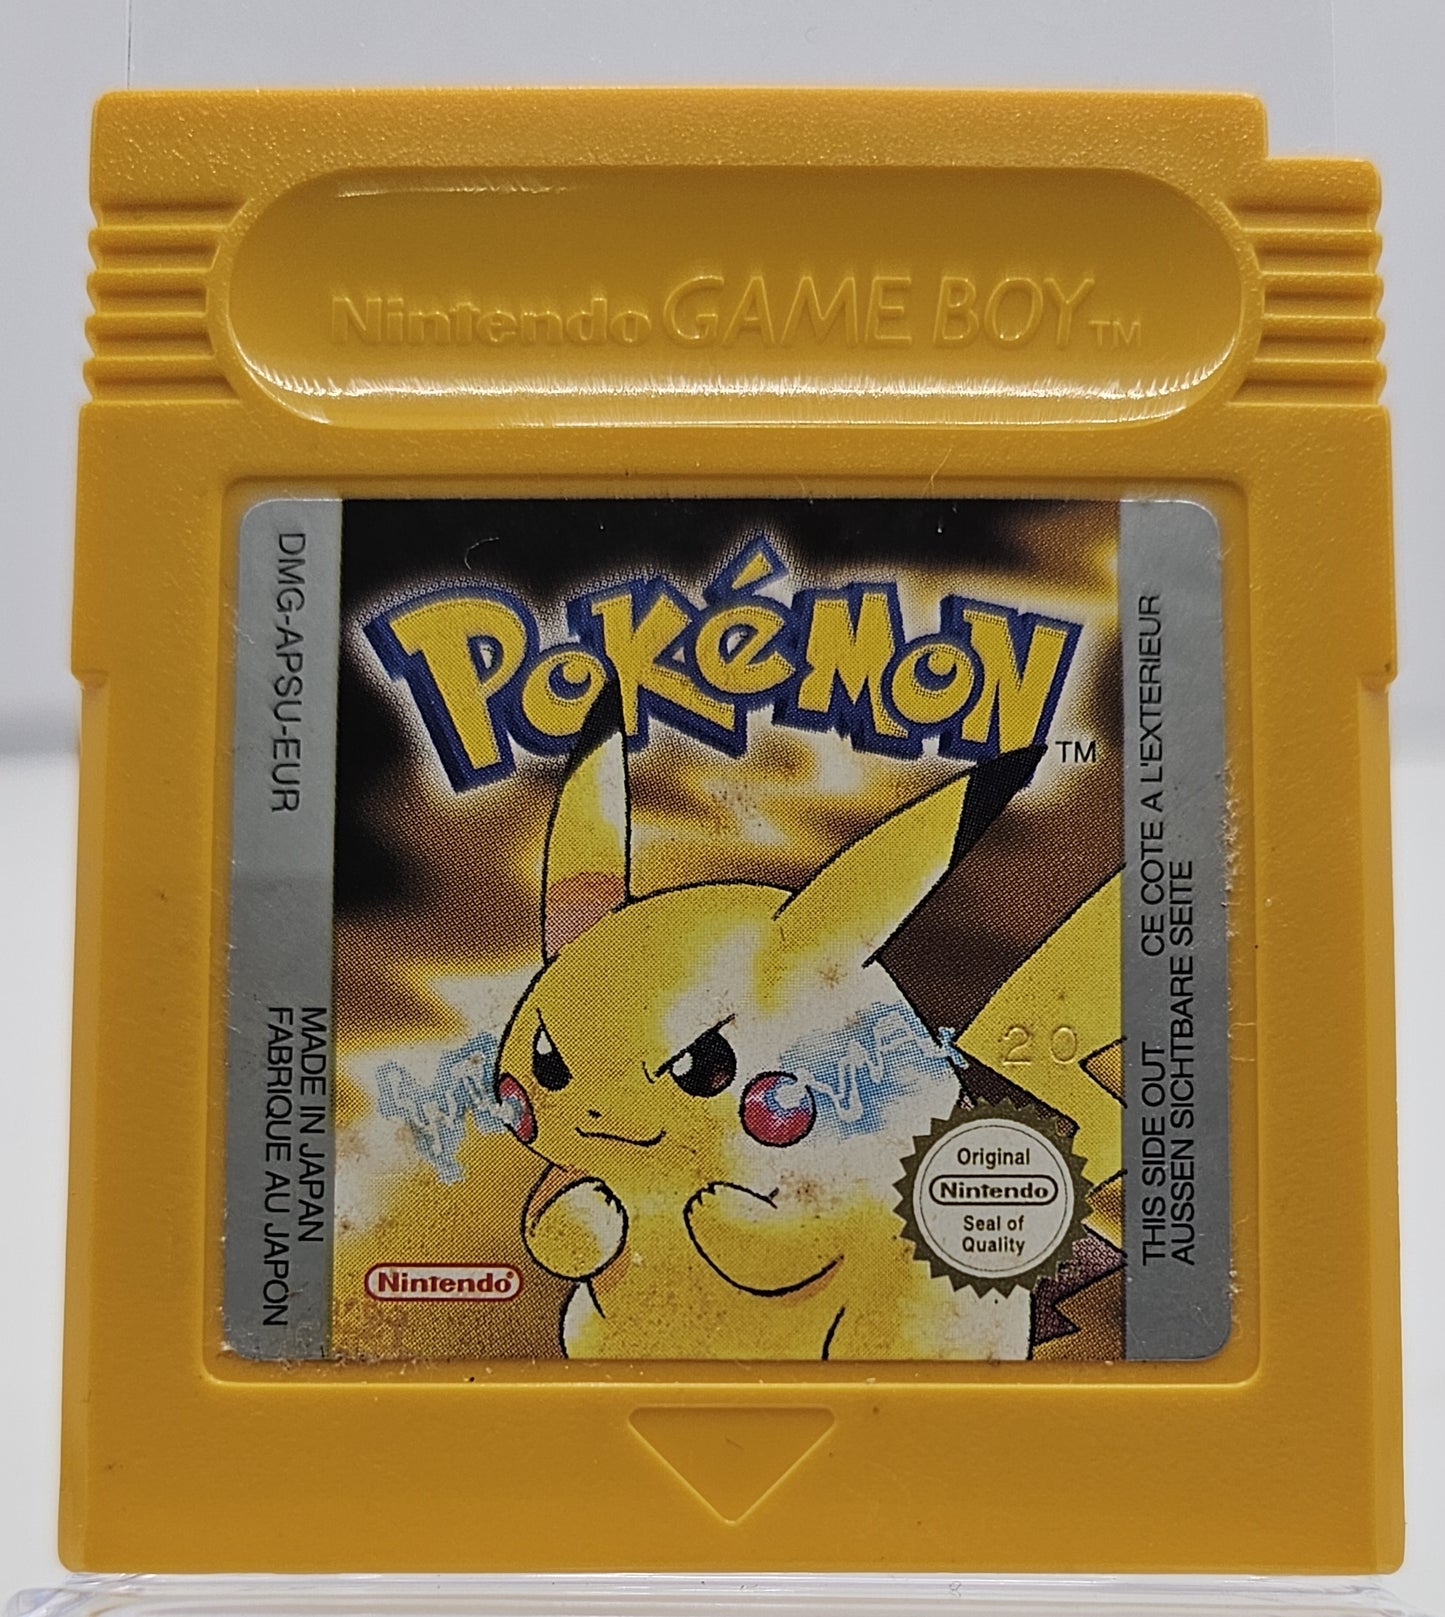 Gameboy Pokemon Yellow Version (Cardridge)